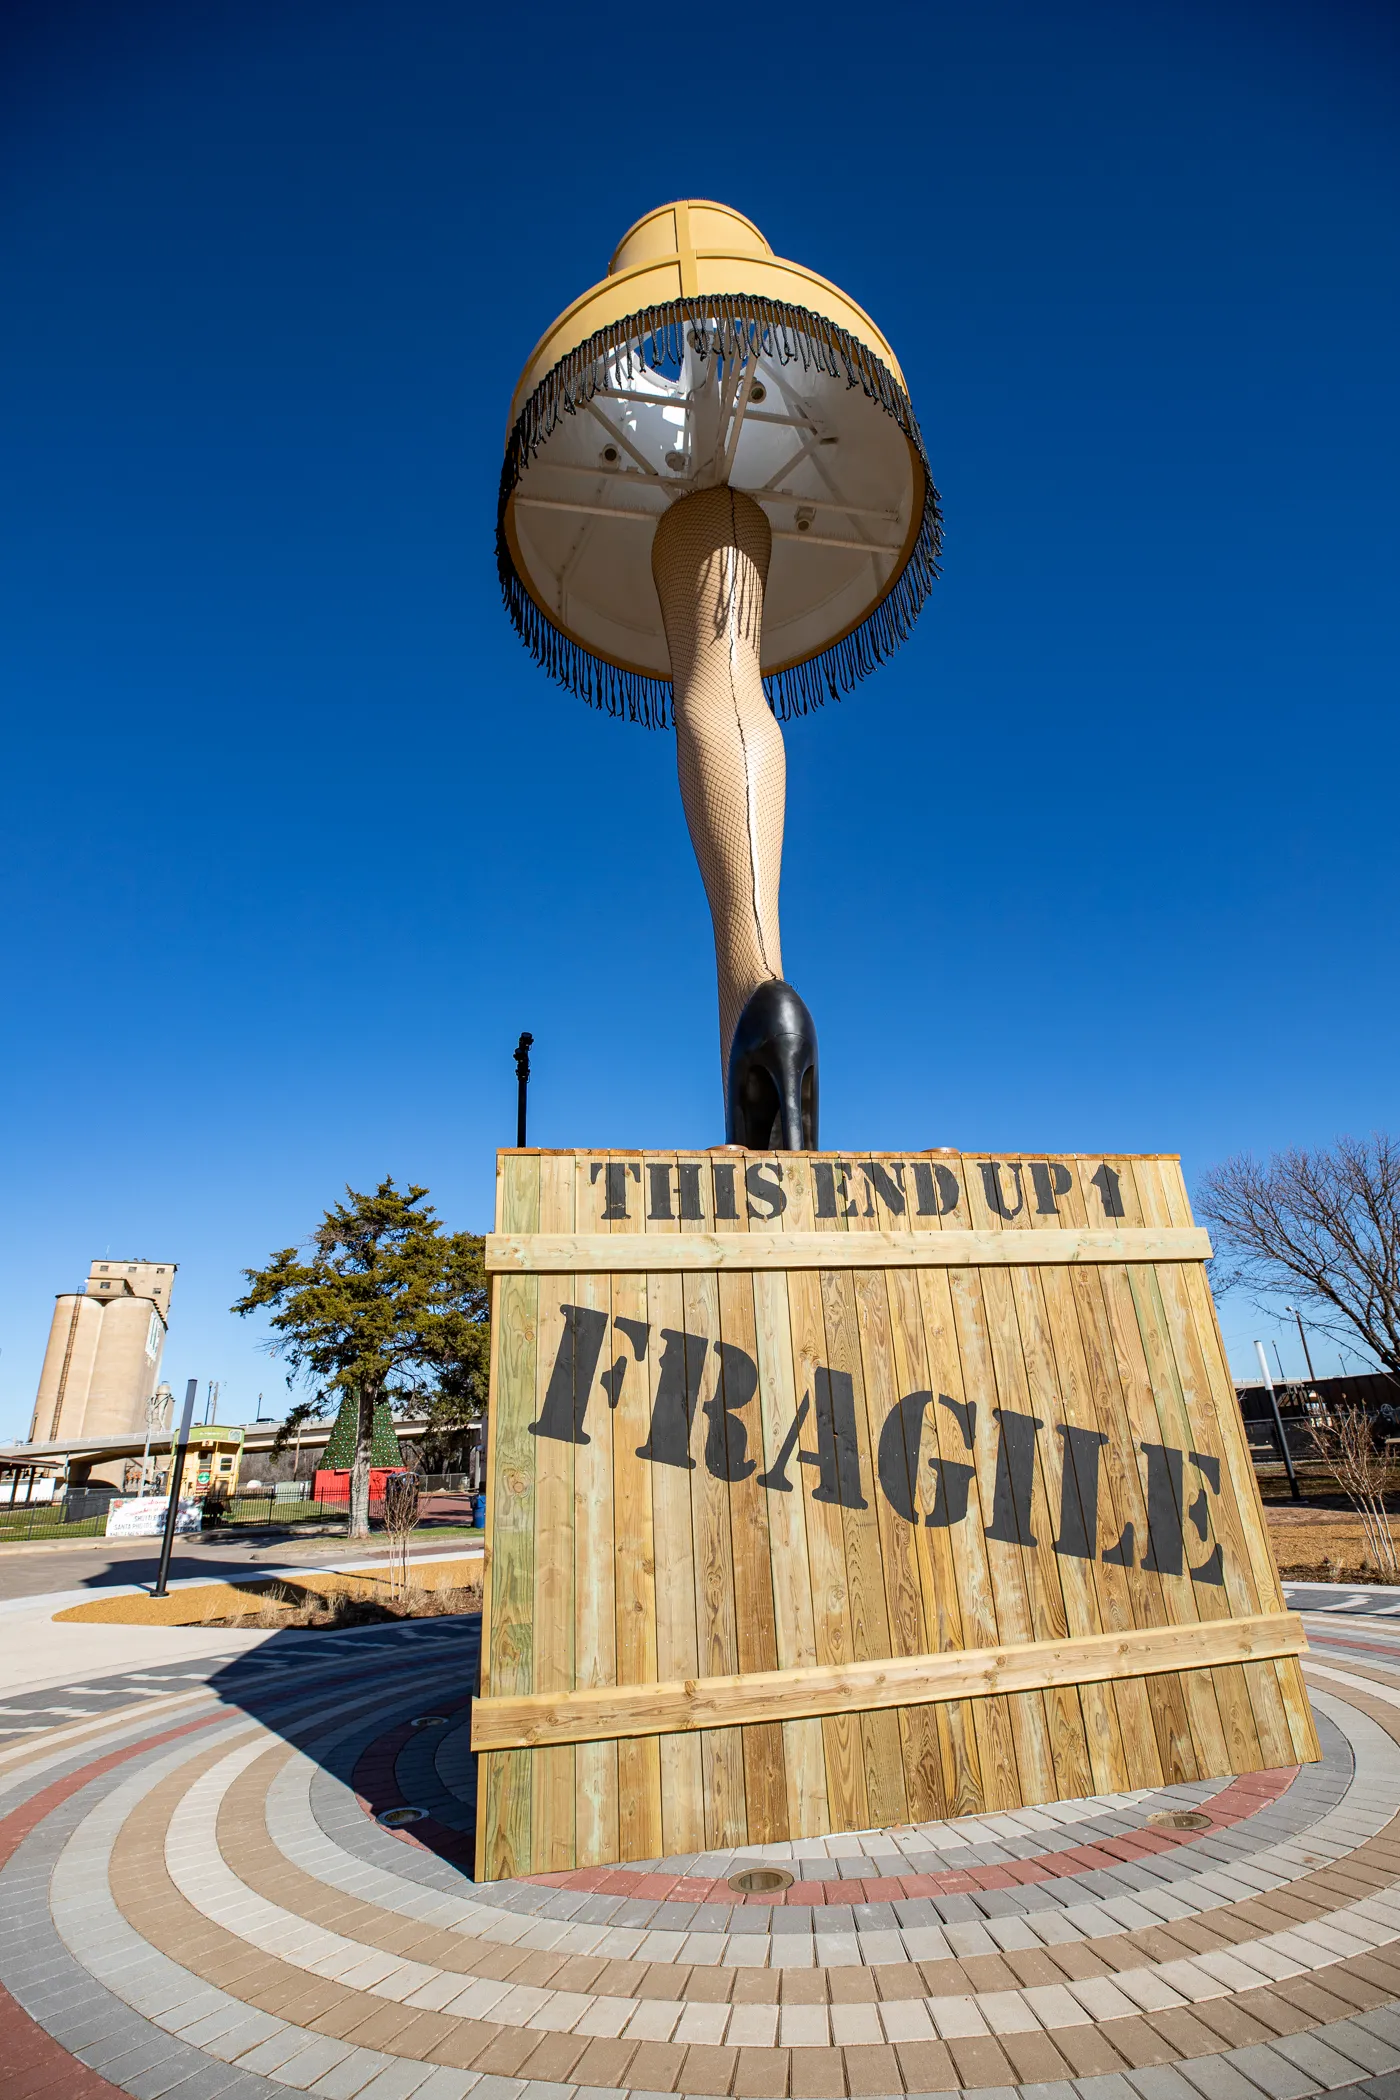 Giant Leg Lamp in Chickasha, Oklahoma A Christmas Story Leg Lamp in Oklahoma